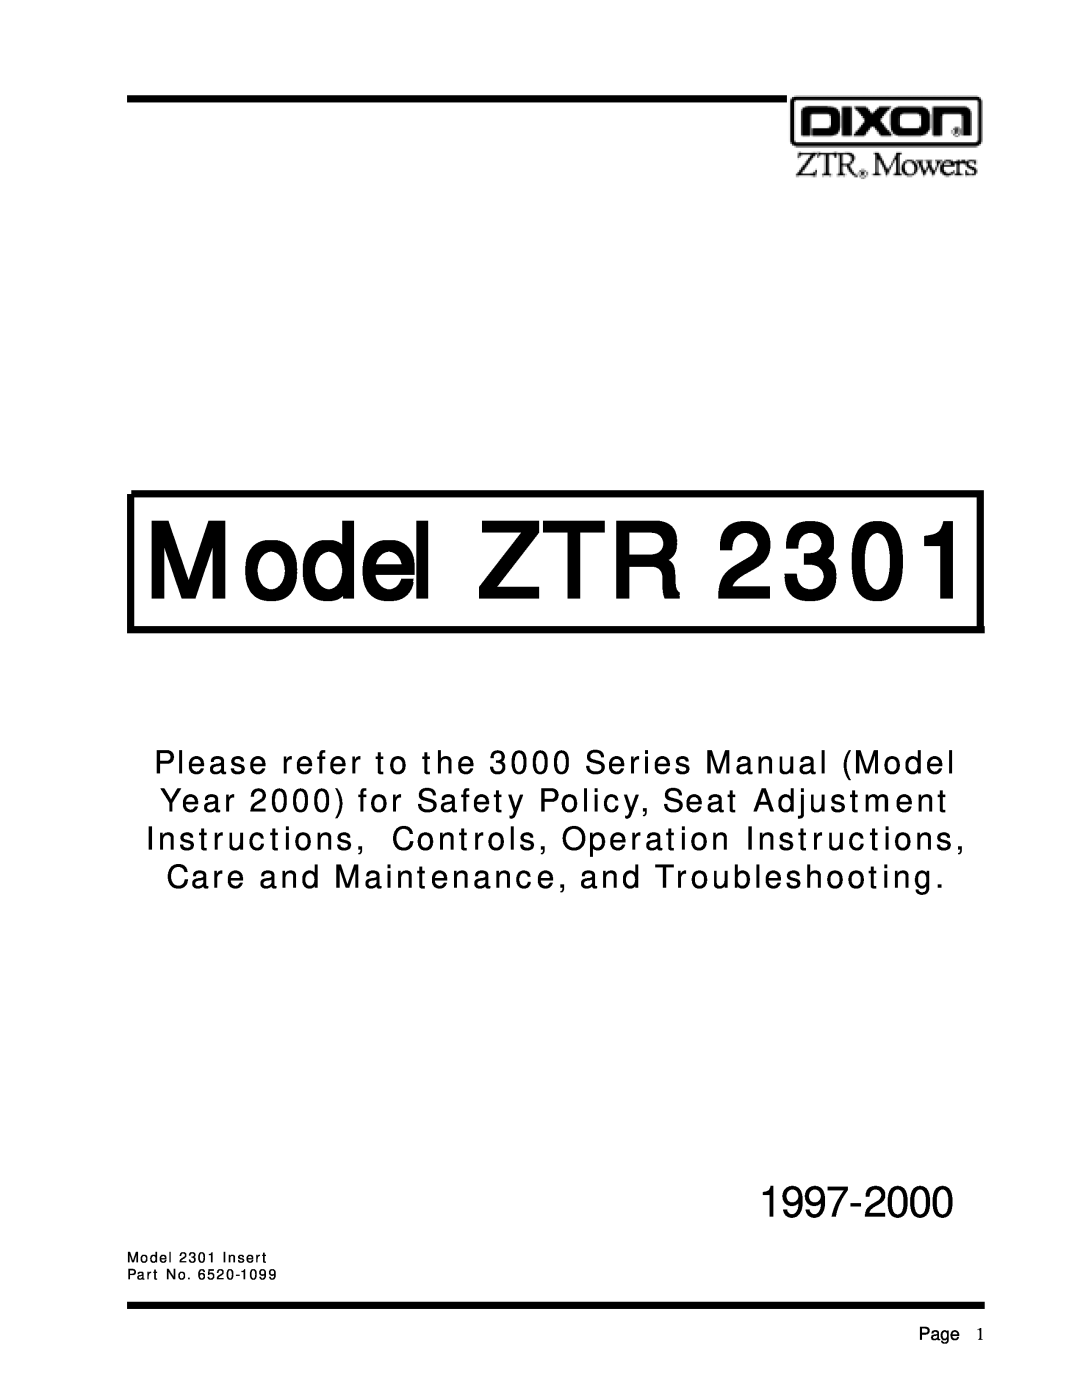 Dixon ZTR 3304, ZTR 3303, 1855-0599, 6520-1099 manual Model ZTR, 1997-2000, Page, Model 2301 Insert Part No 